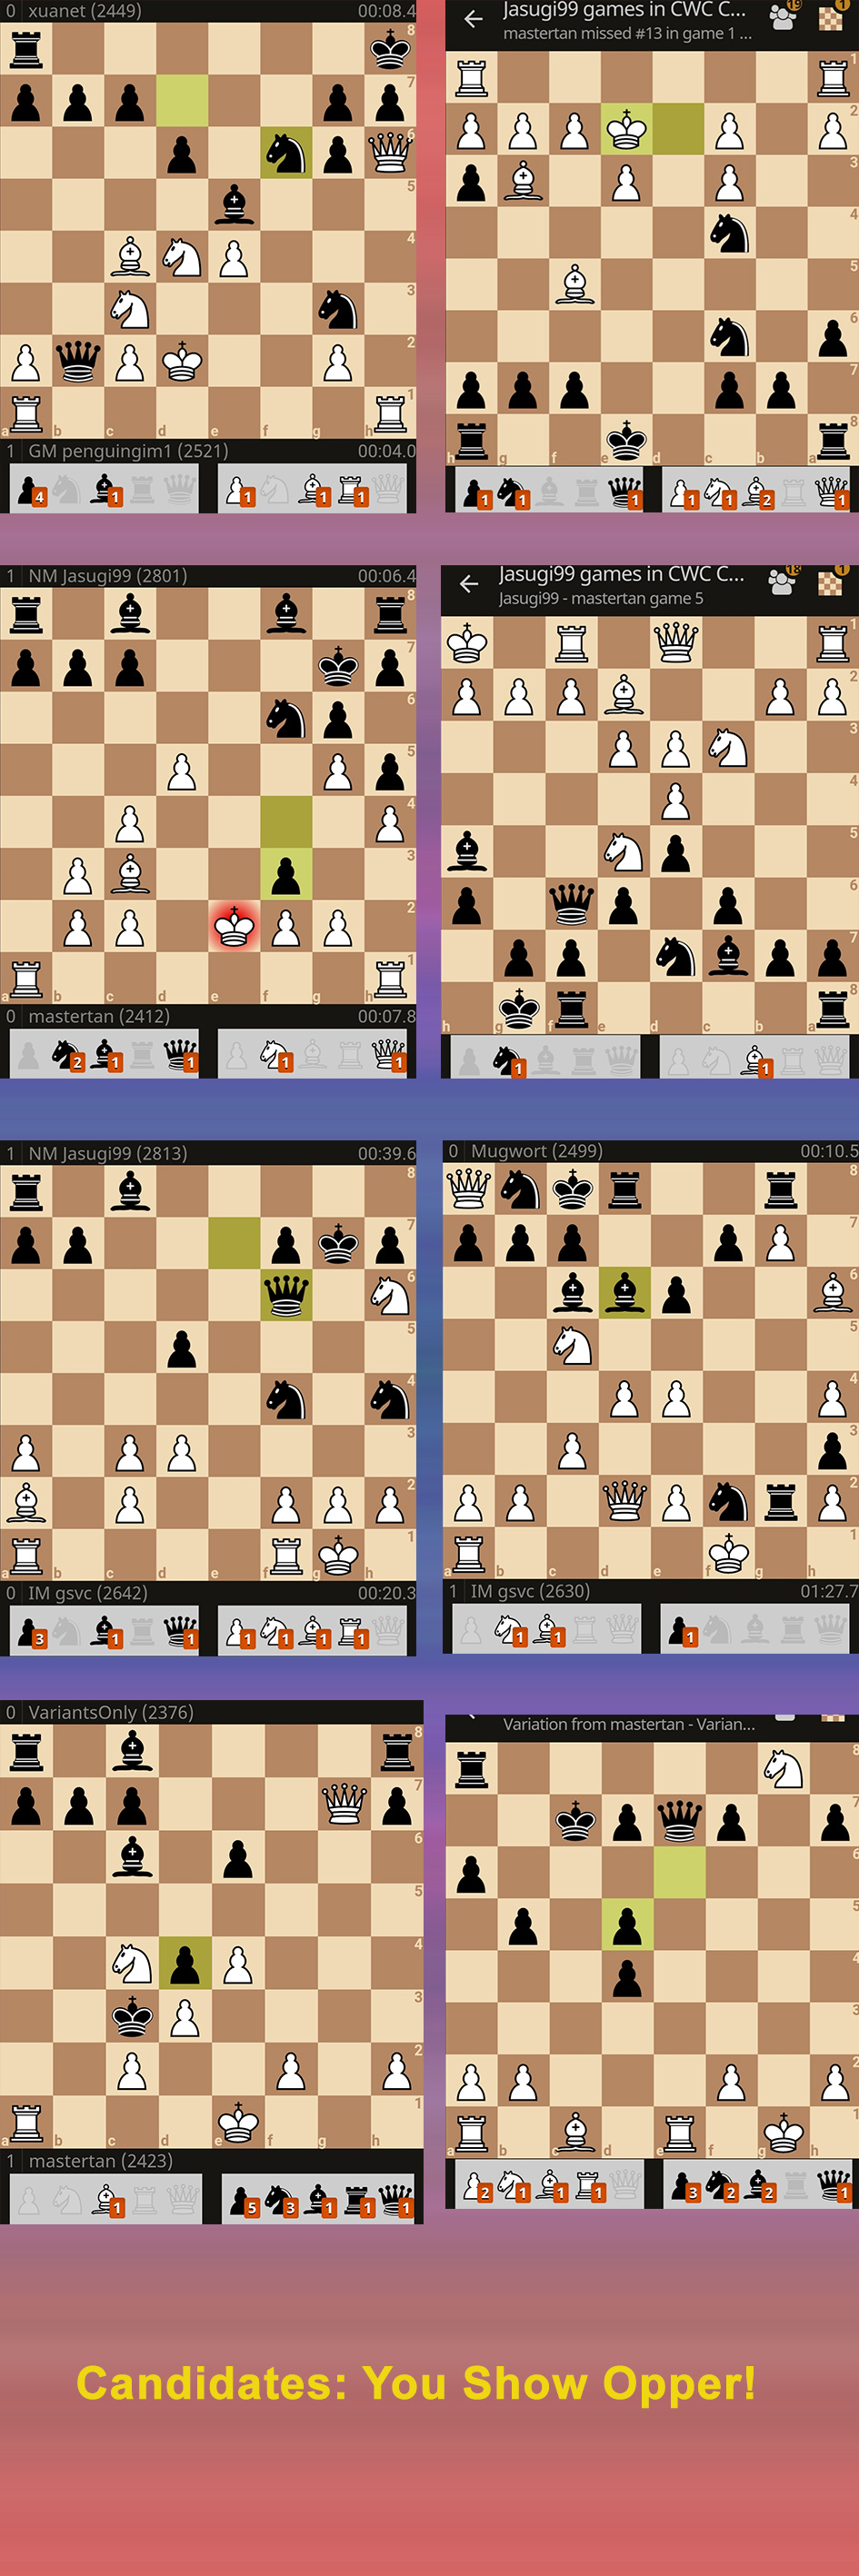 Andrew Tang v Magnus Carlsen live on lichess! : r/chess